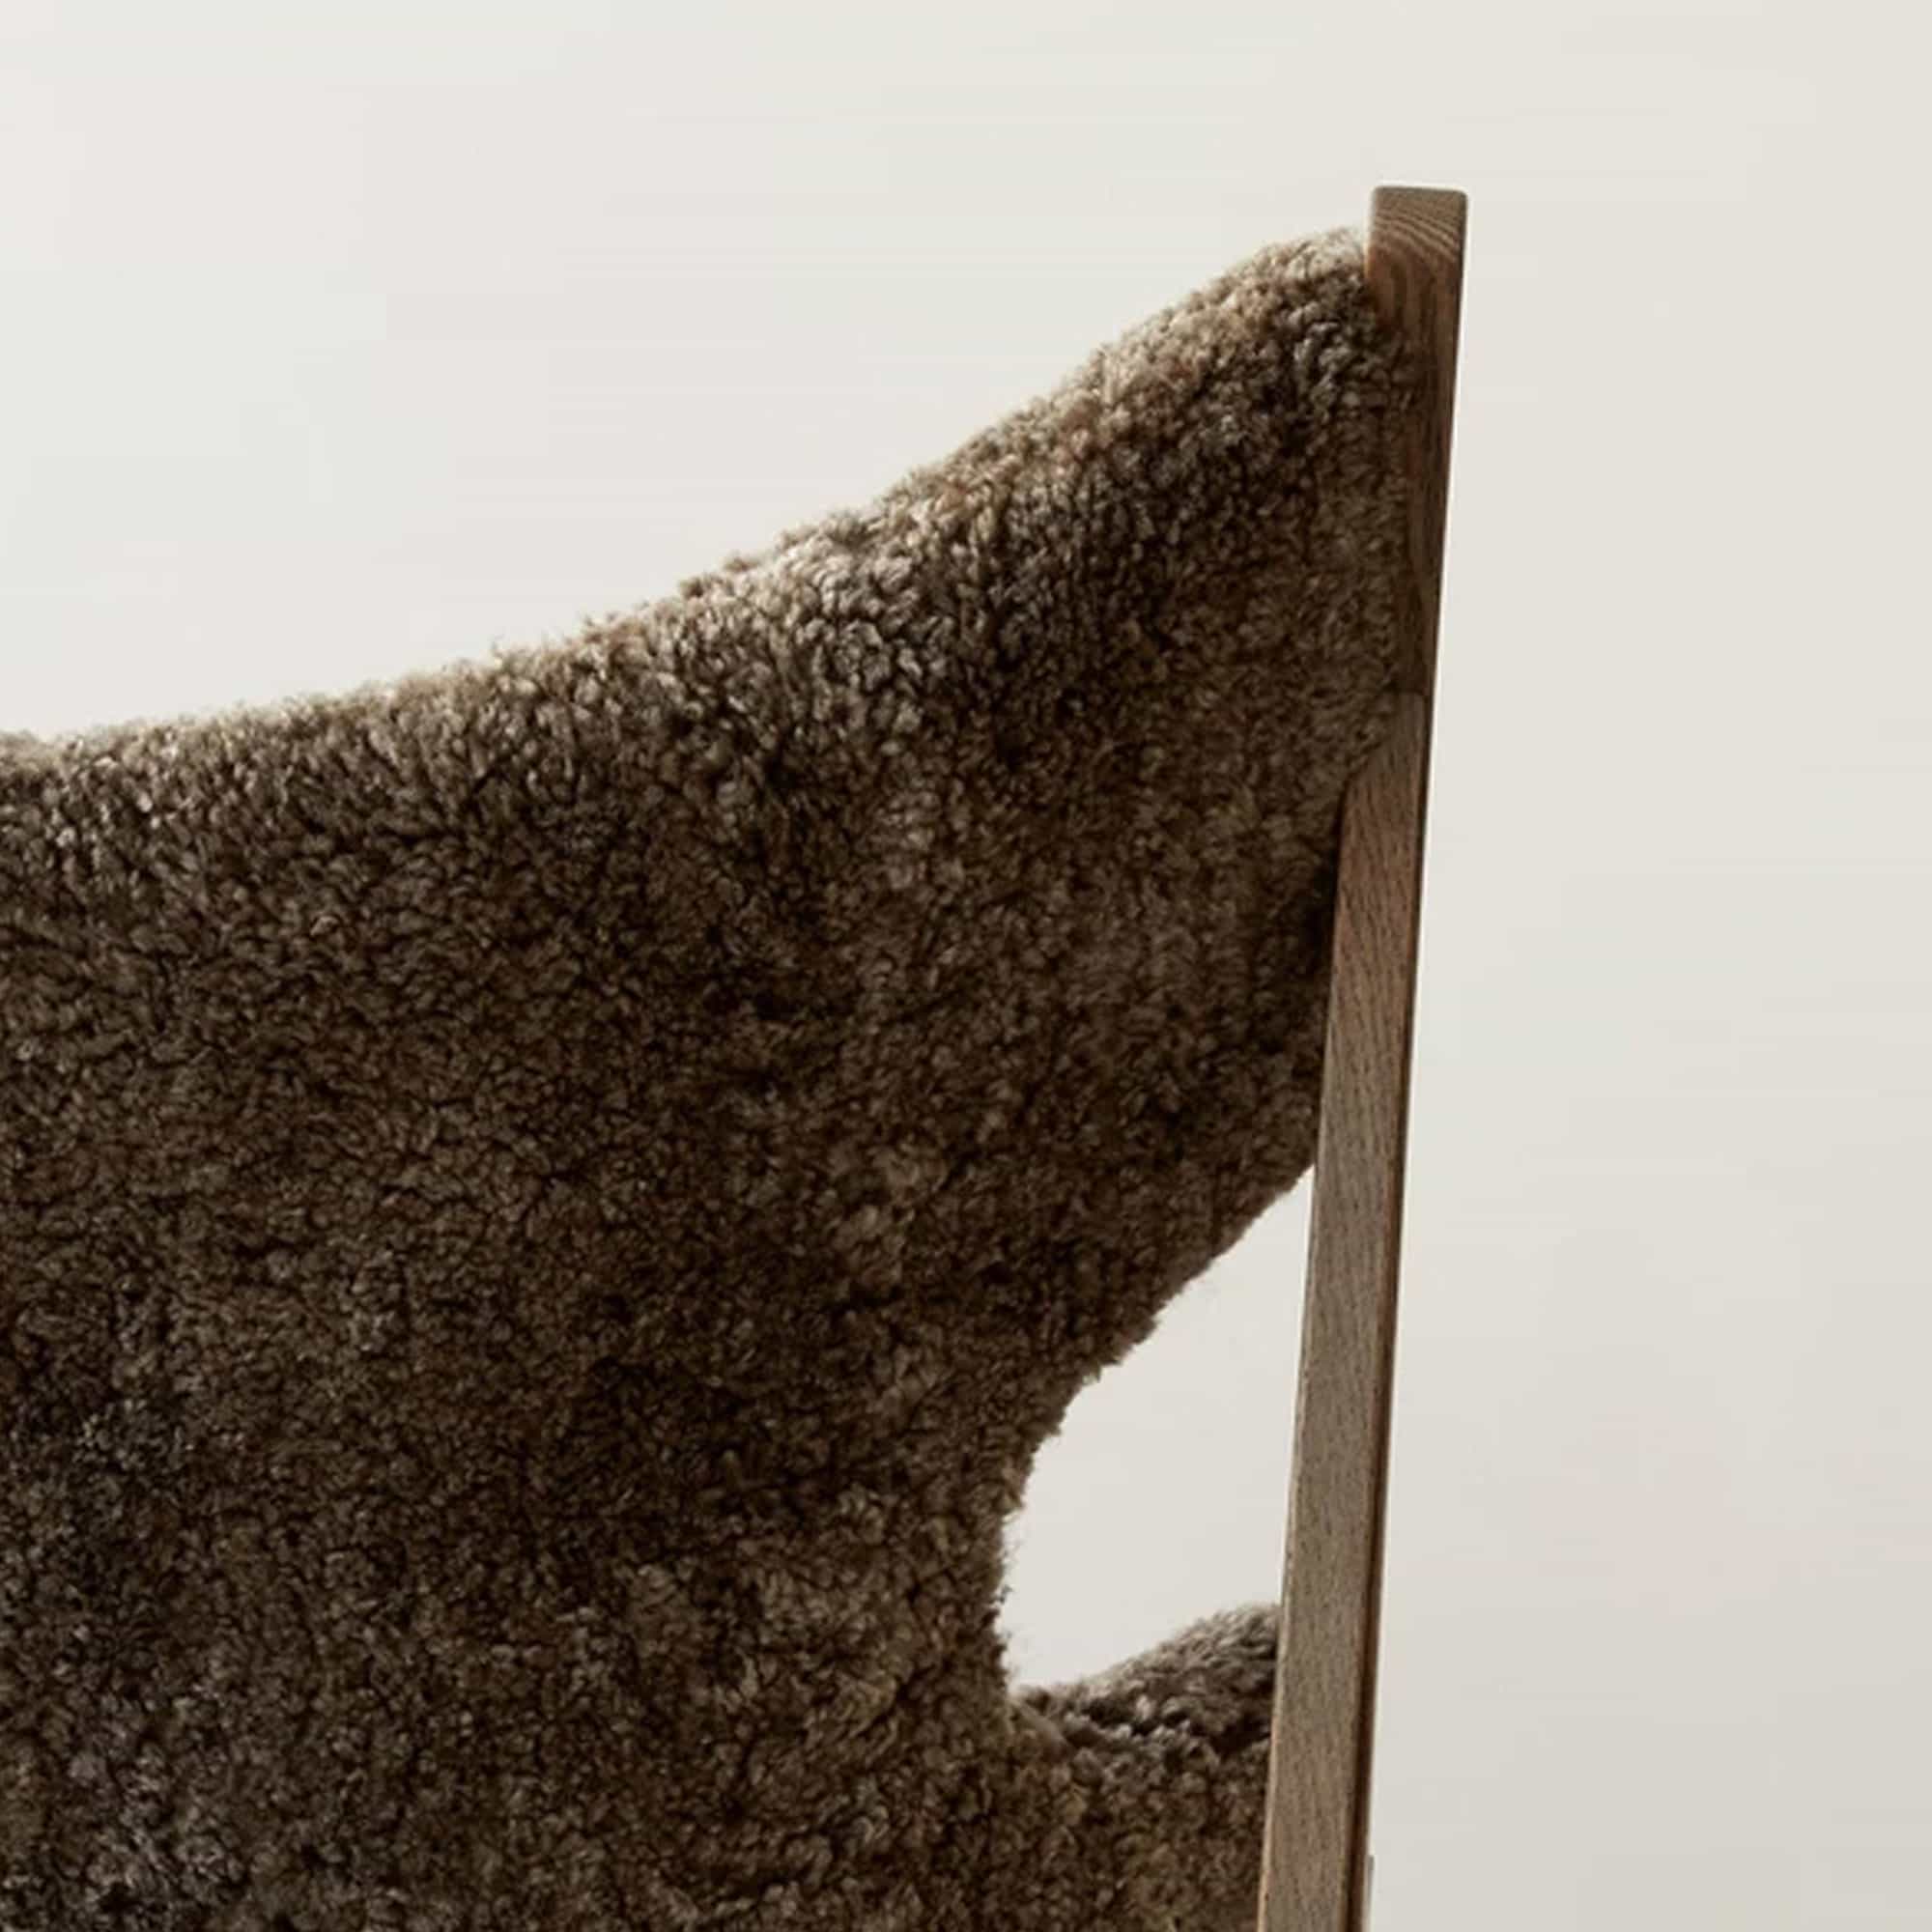 Knitting Lounge Chair Sheepskin